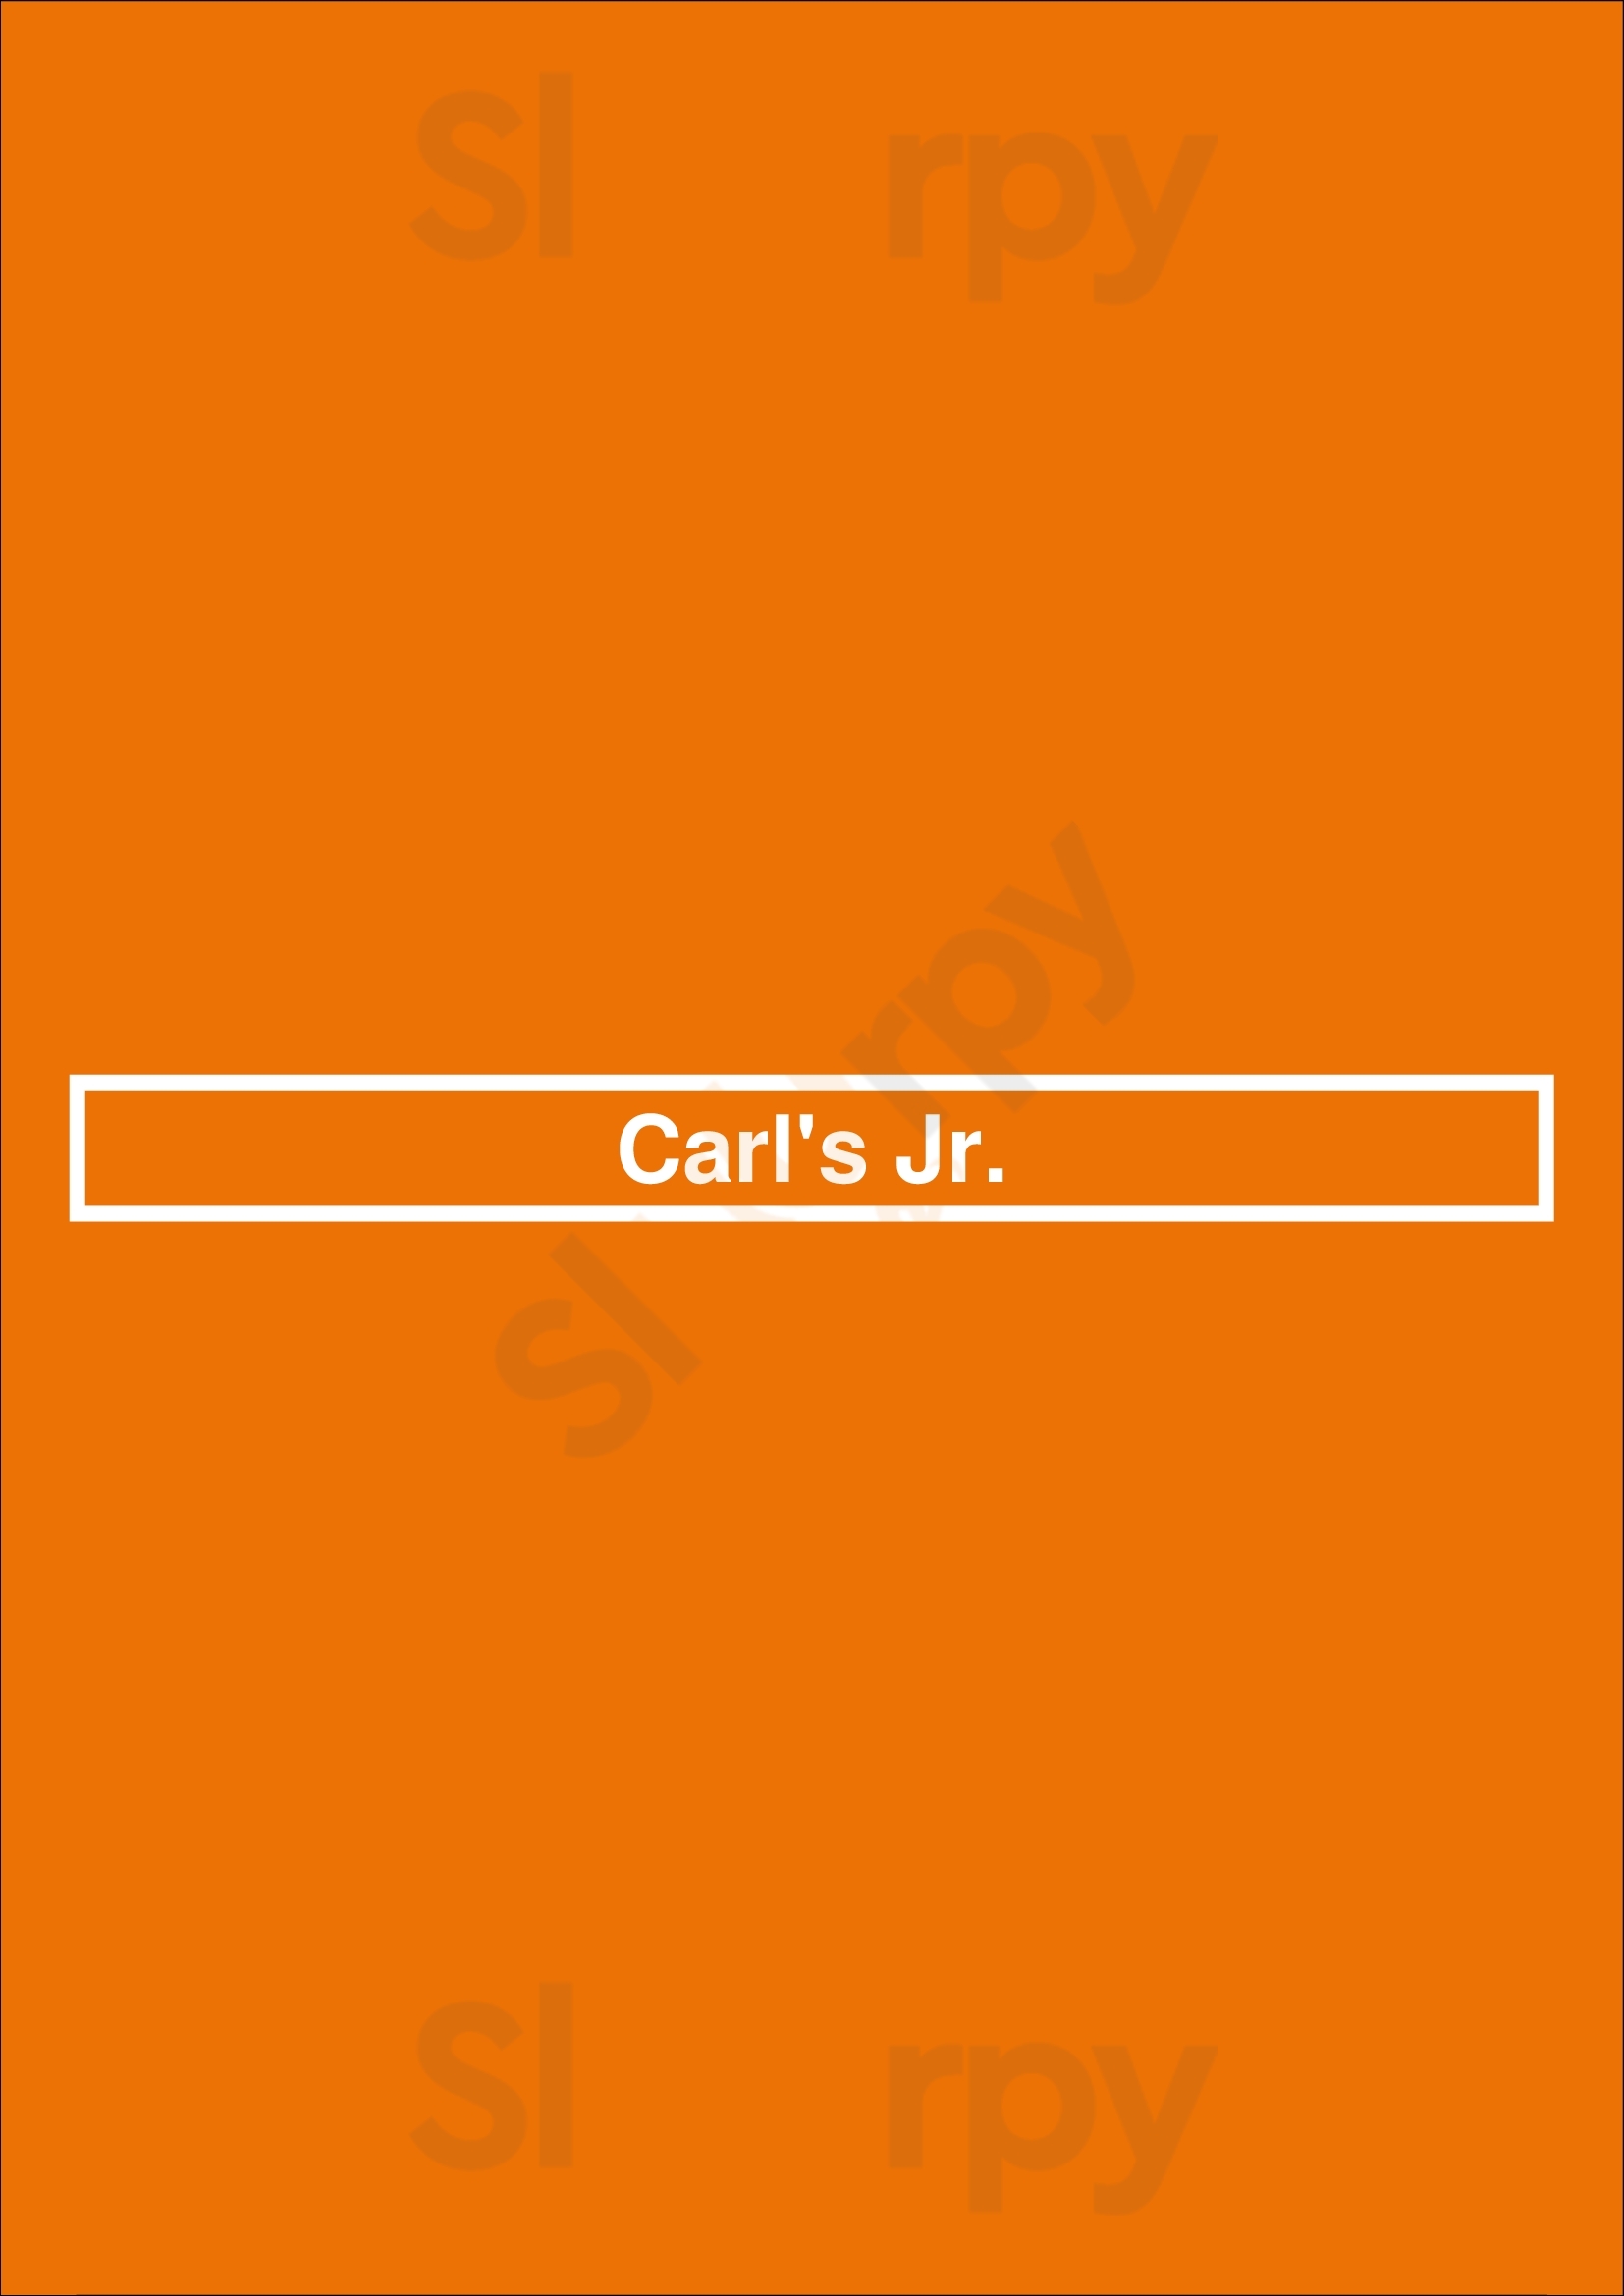 Carl's Jr. Huntington Beach Menu - 1